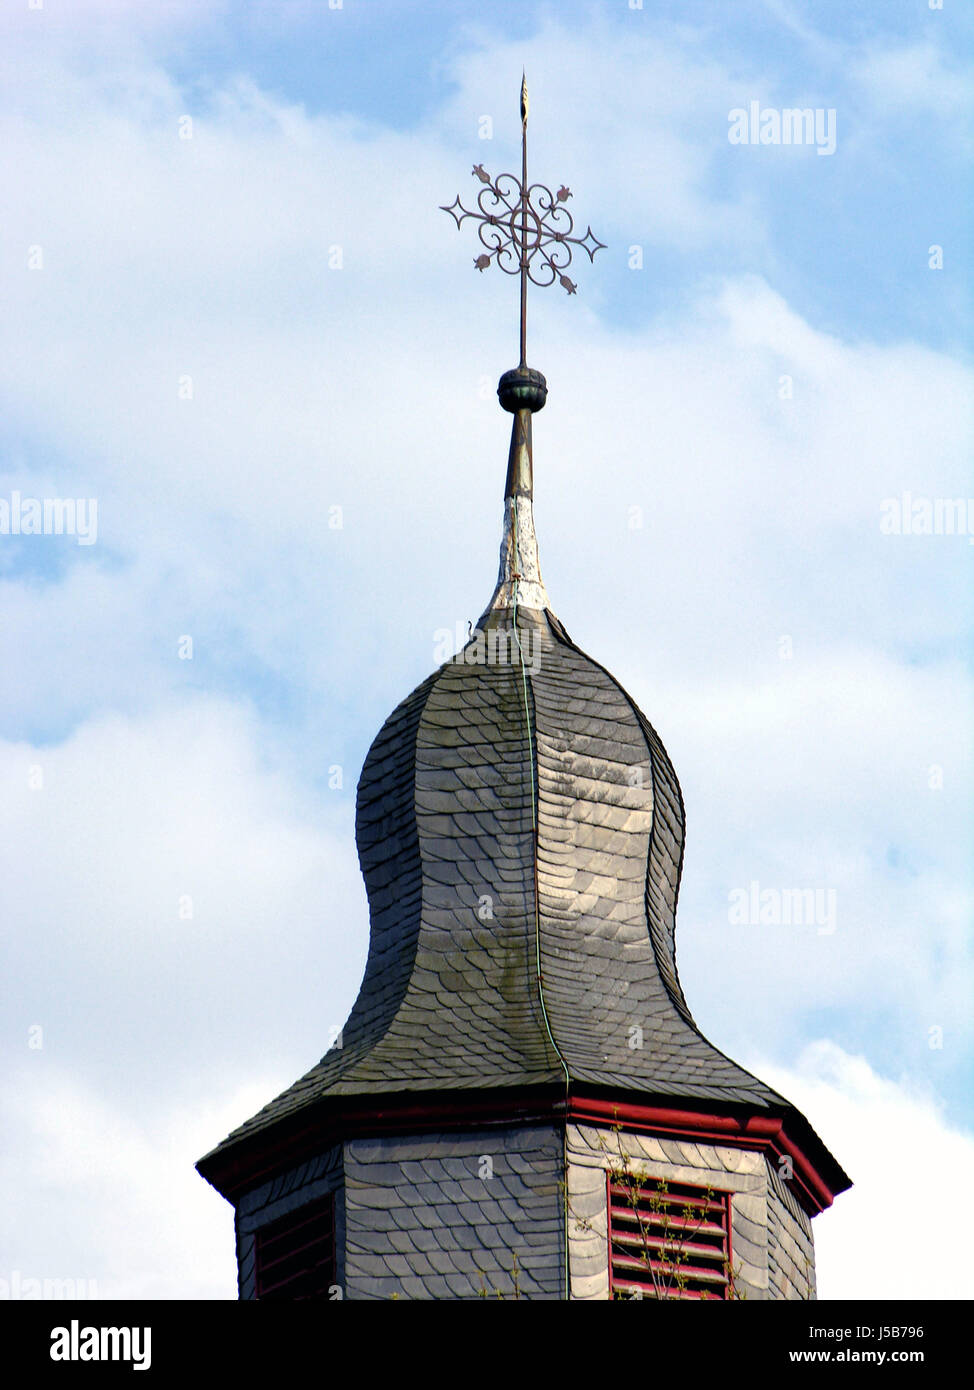 onion tower church Stock Photo